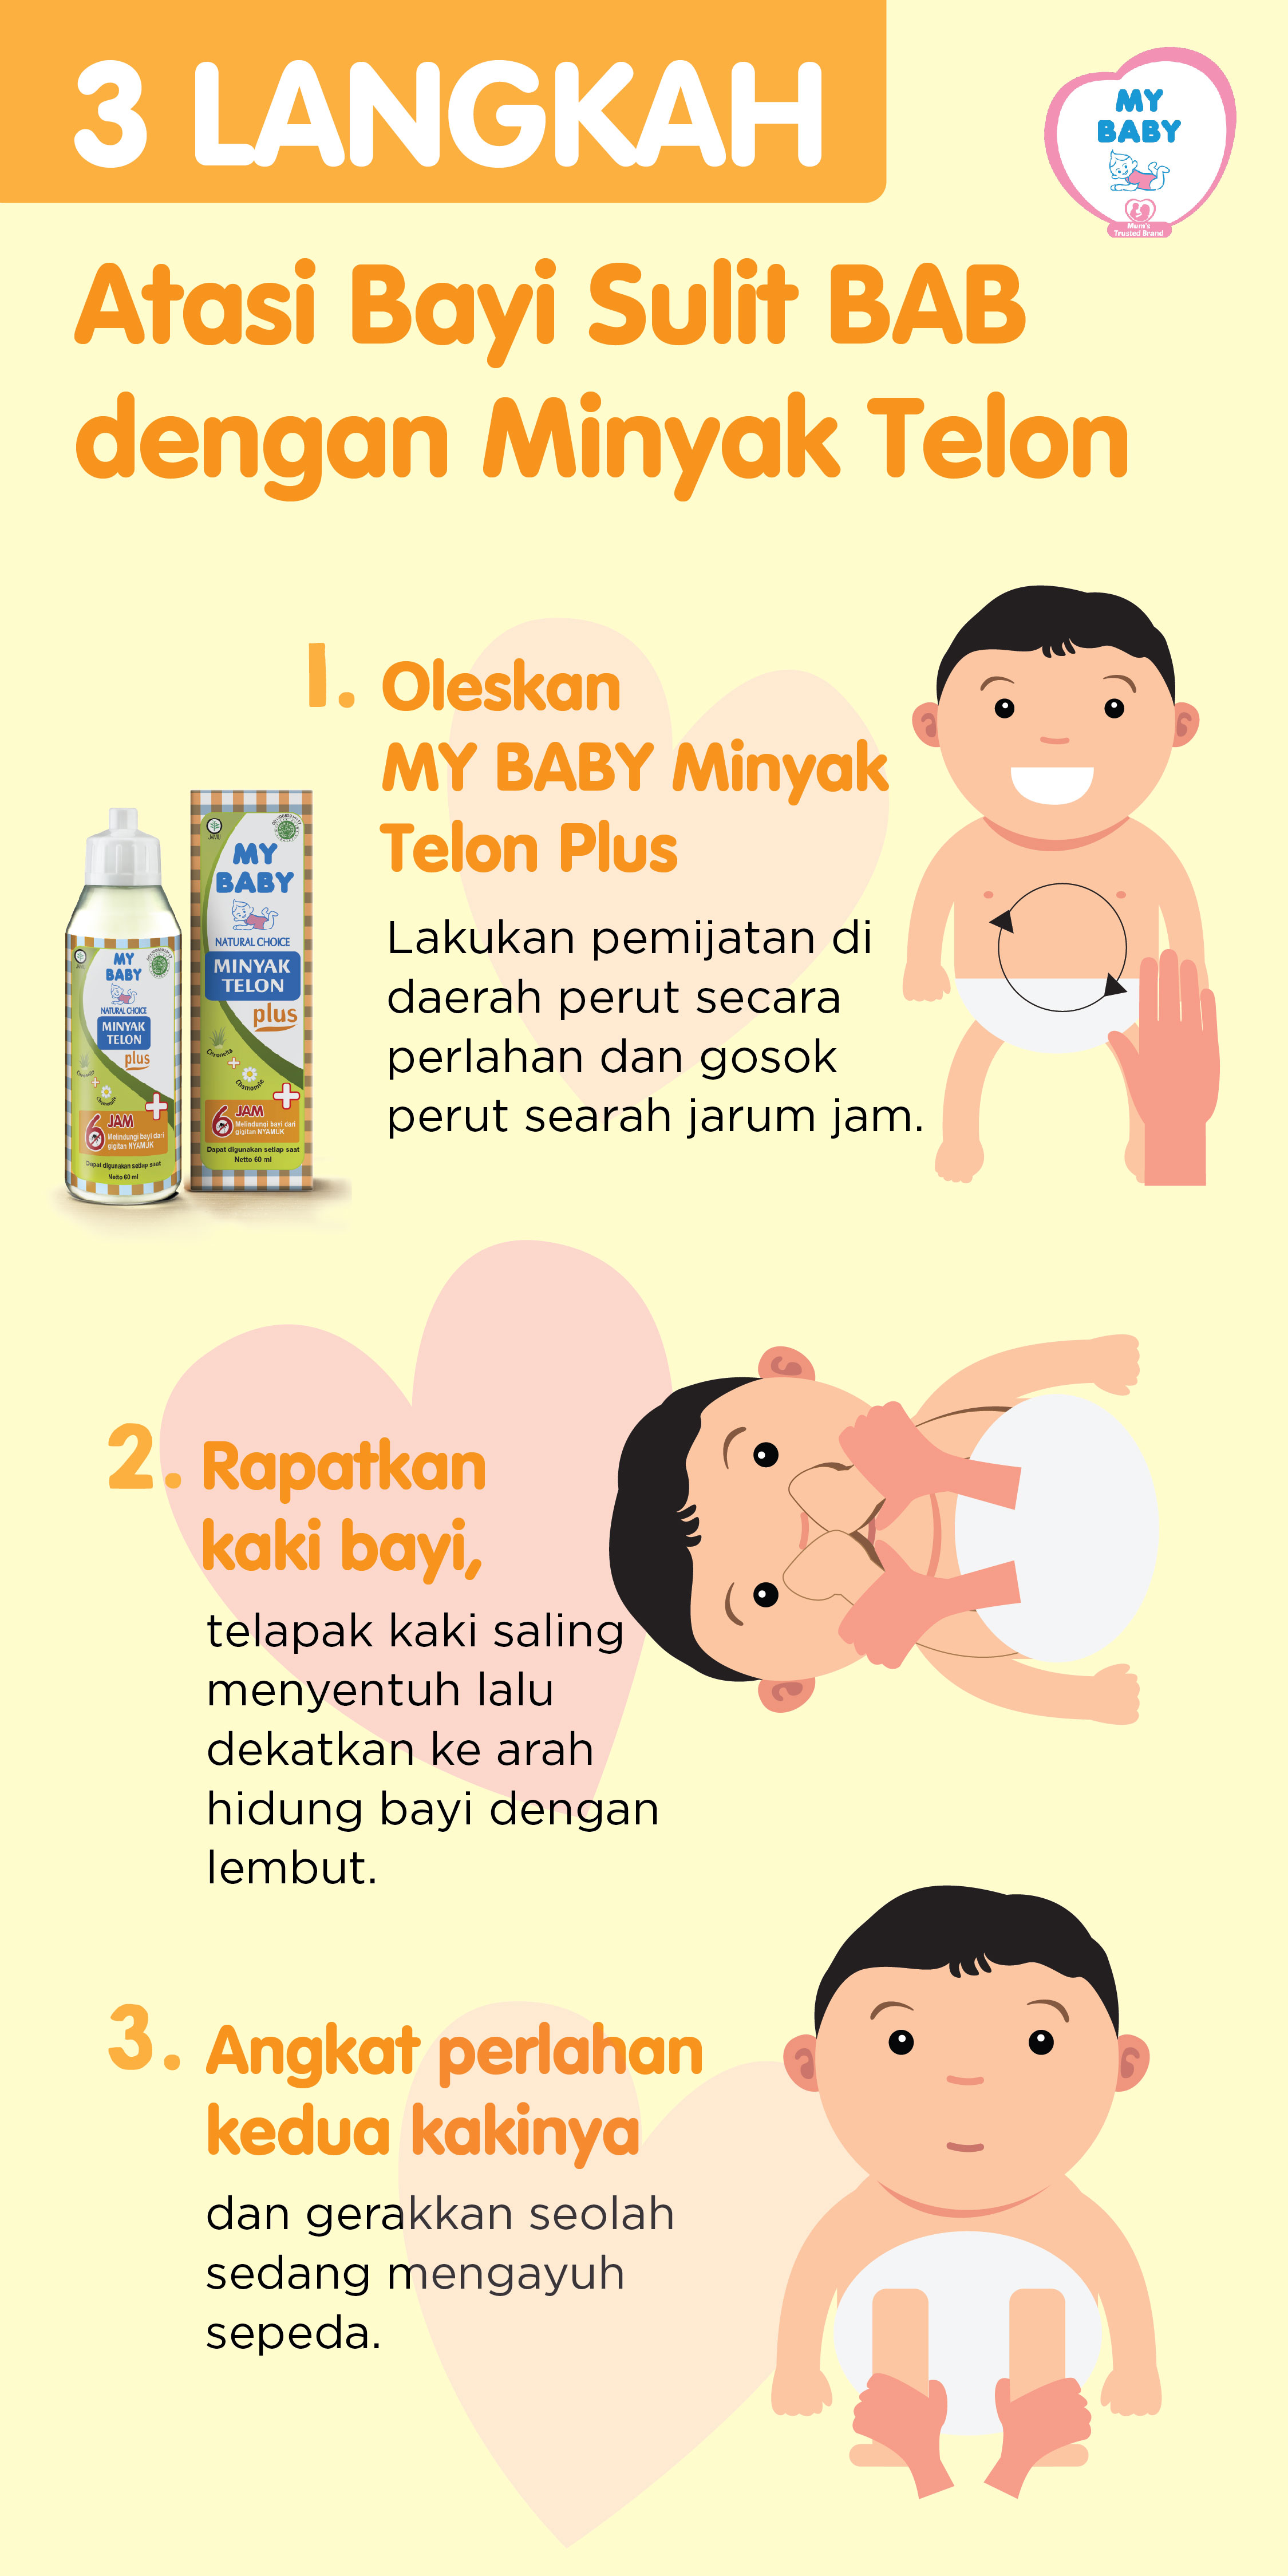 Minyak Telon Untuk Bayi Sulit BAB